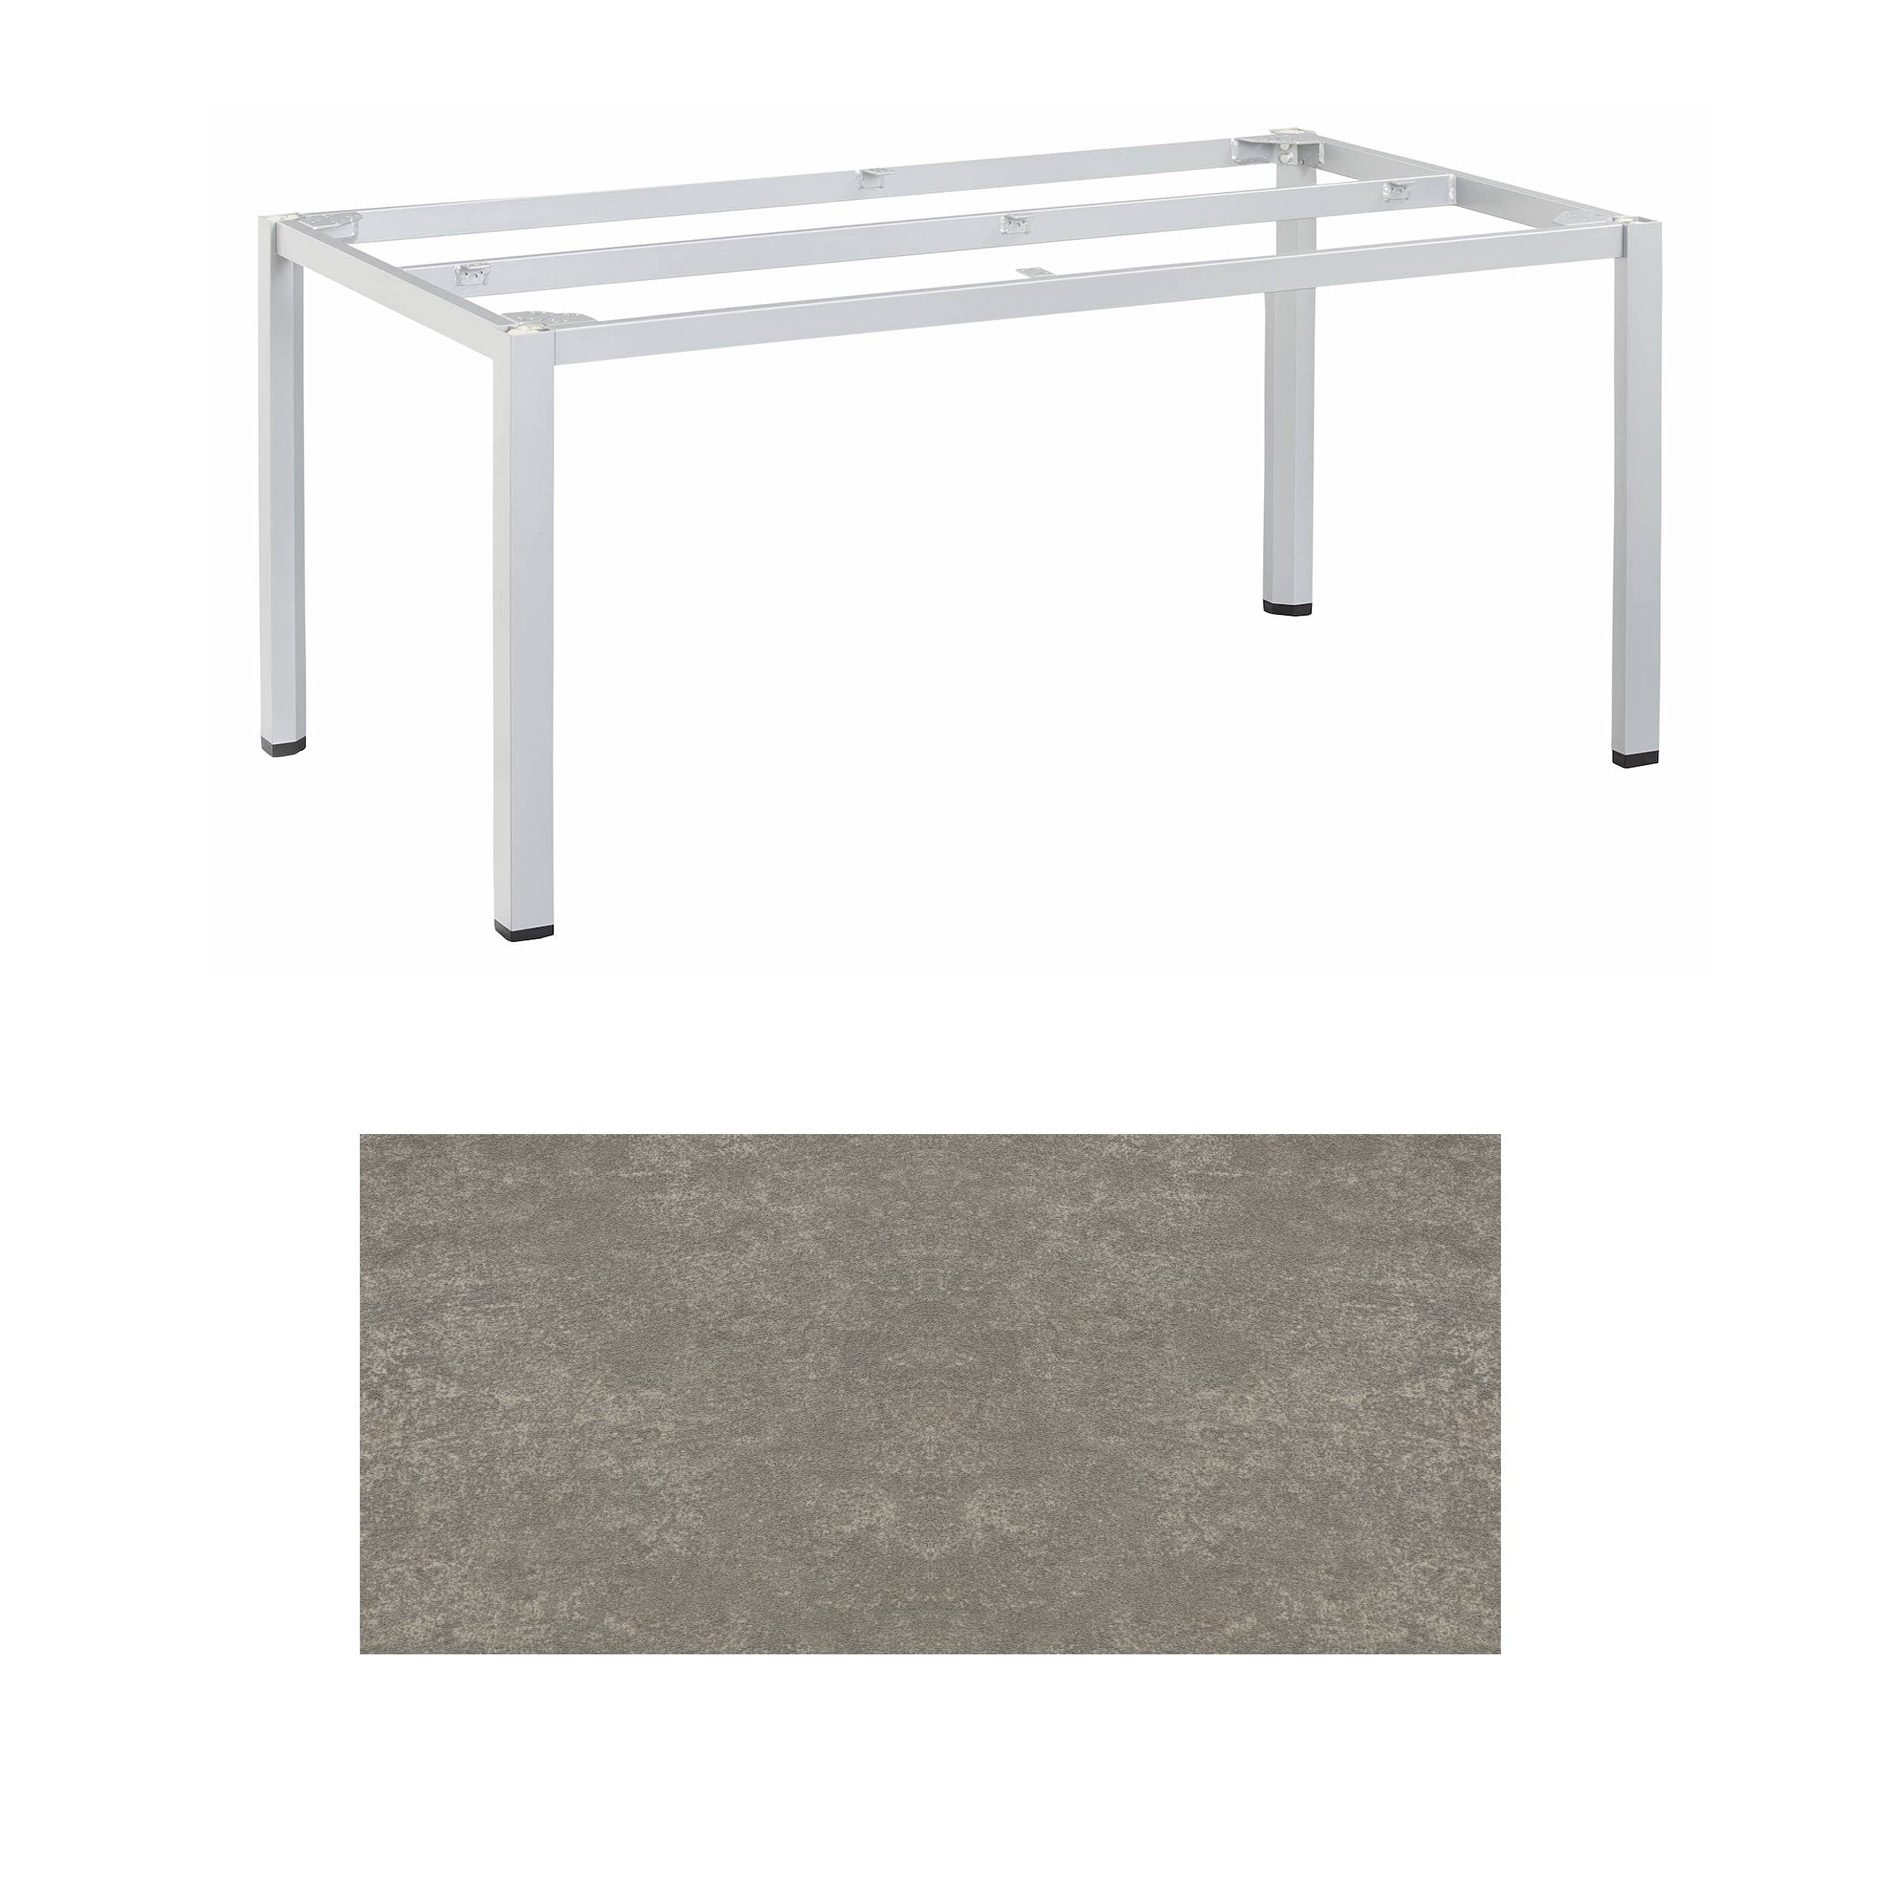 Kettler "Cubic" Tischgestell 180x95 cm, Aluminium silber mit Keramik-Platte grau-taupe